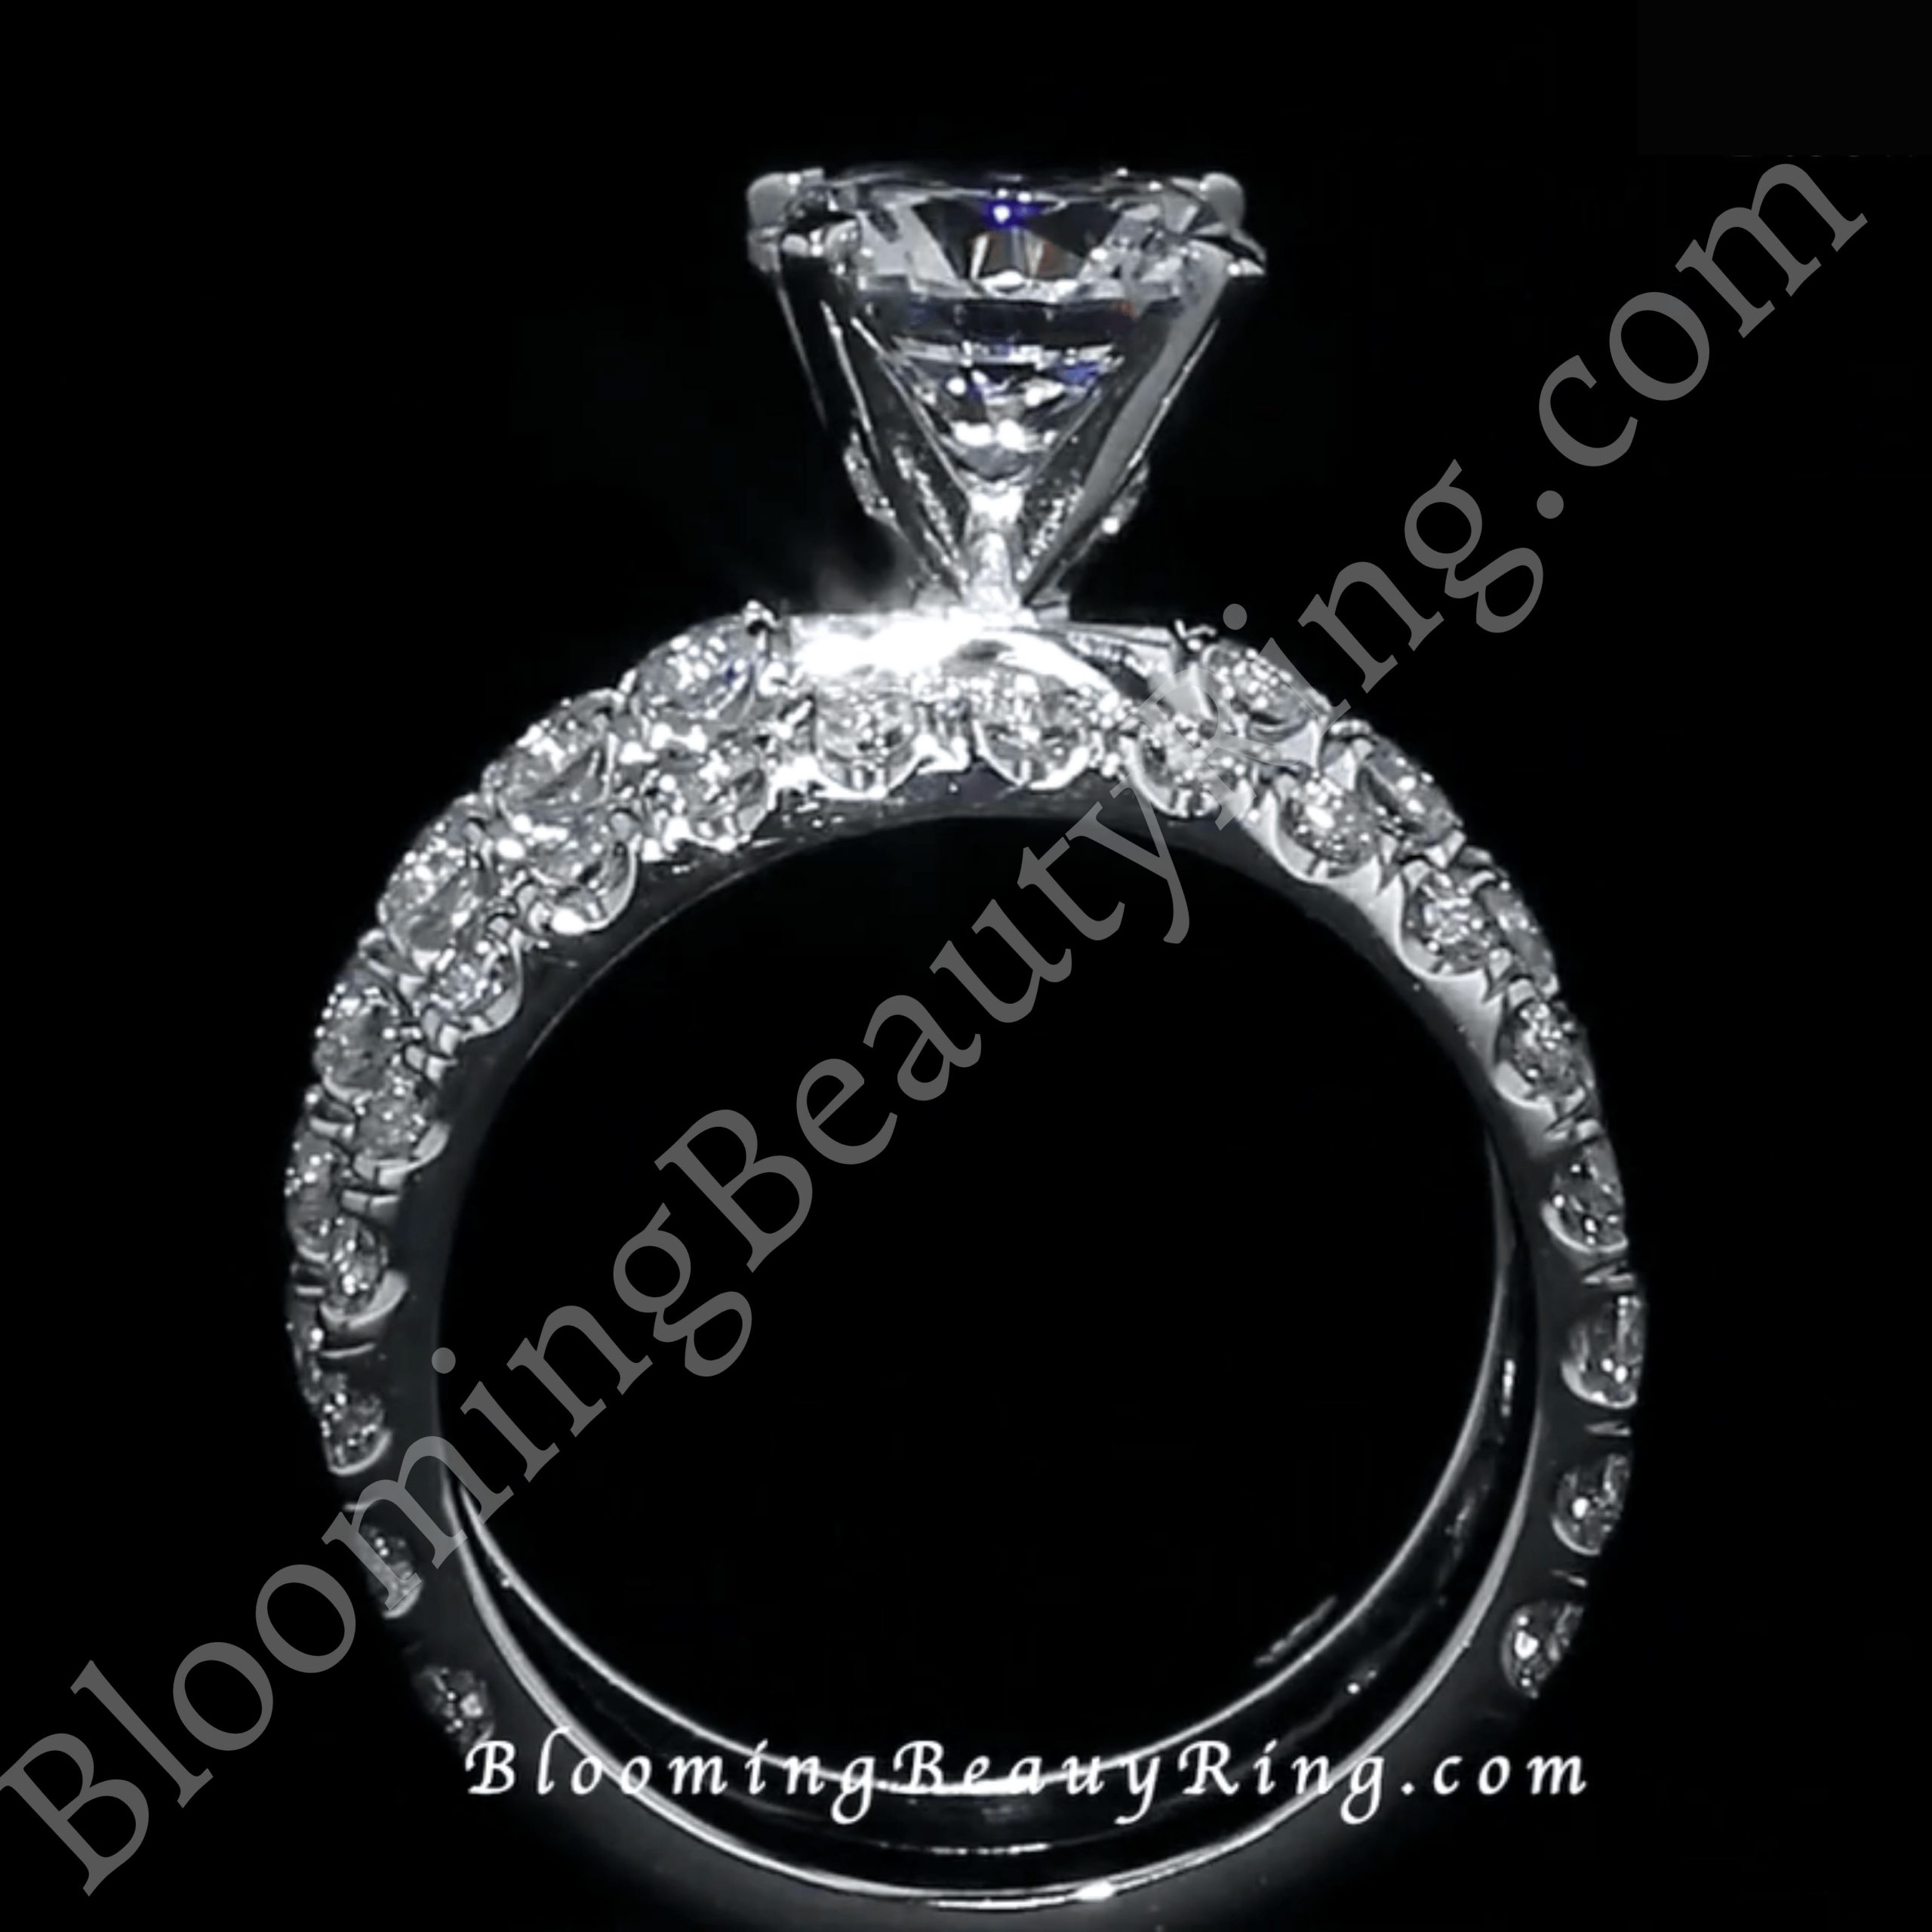 Diamond Engagement Ring Set BBR-670set standing up